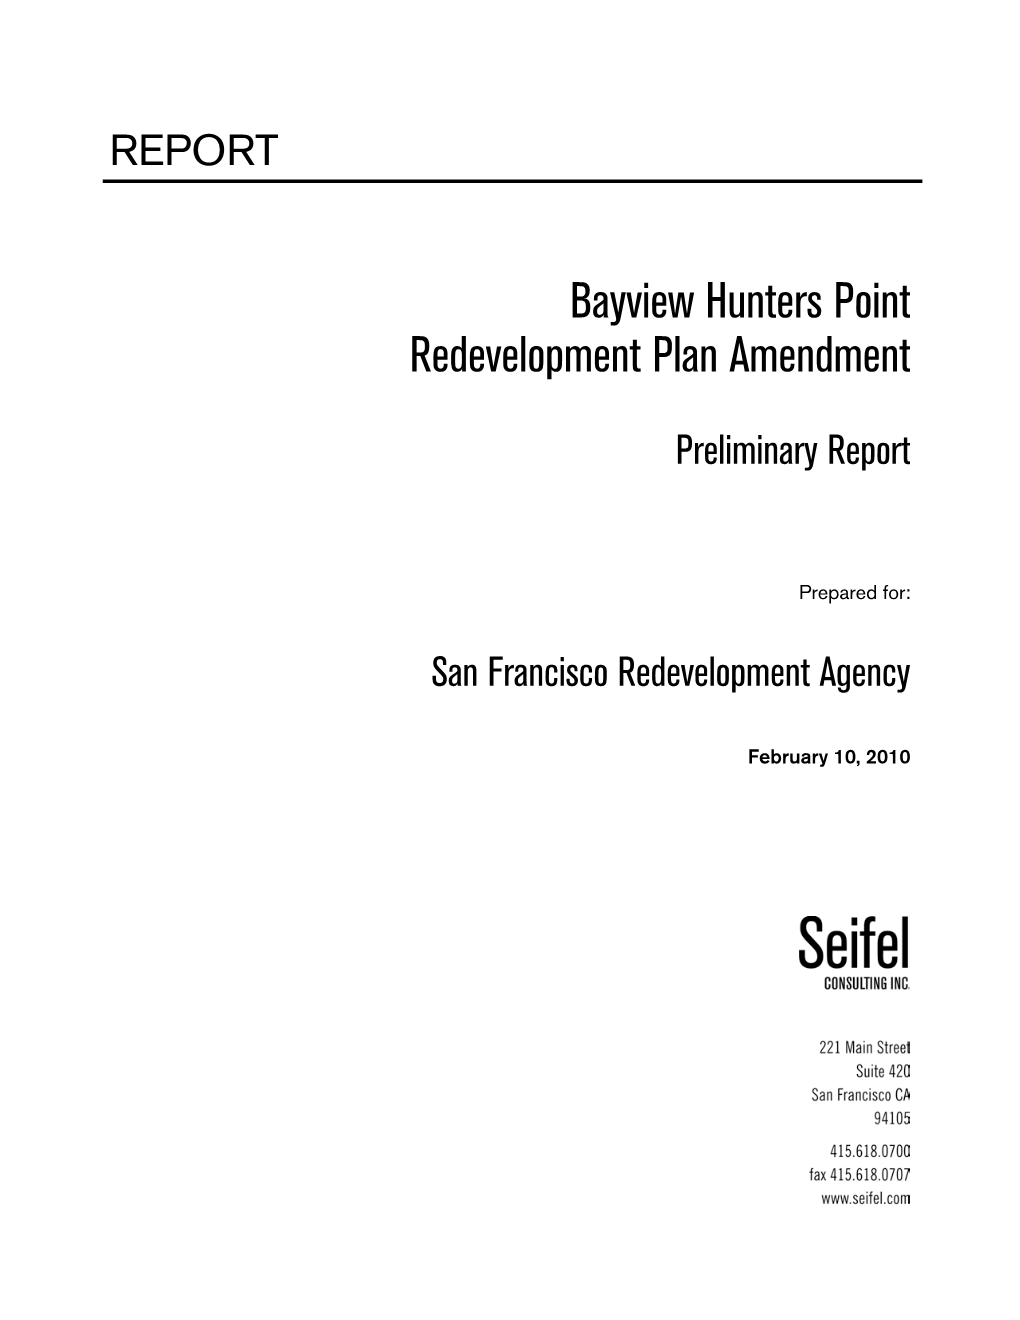 Bayview Hunters Point Redevelopment Plan Amendment